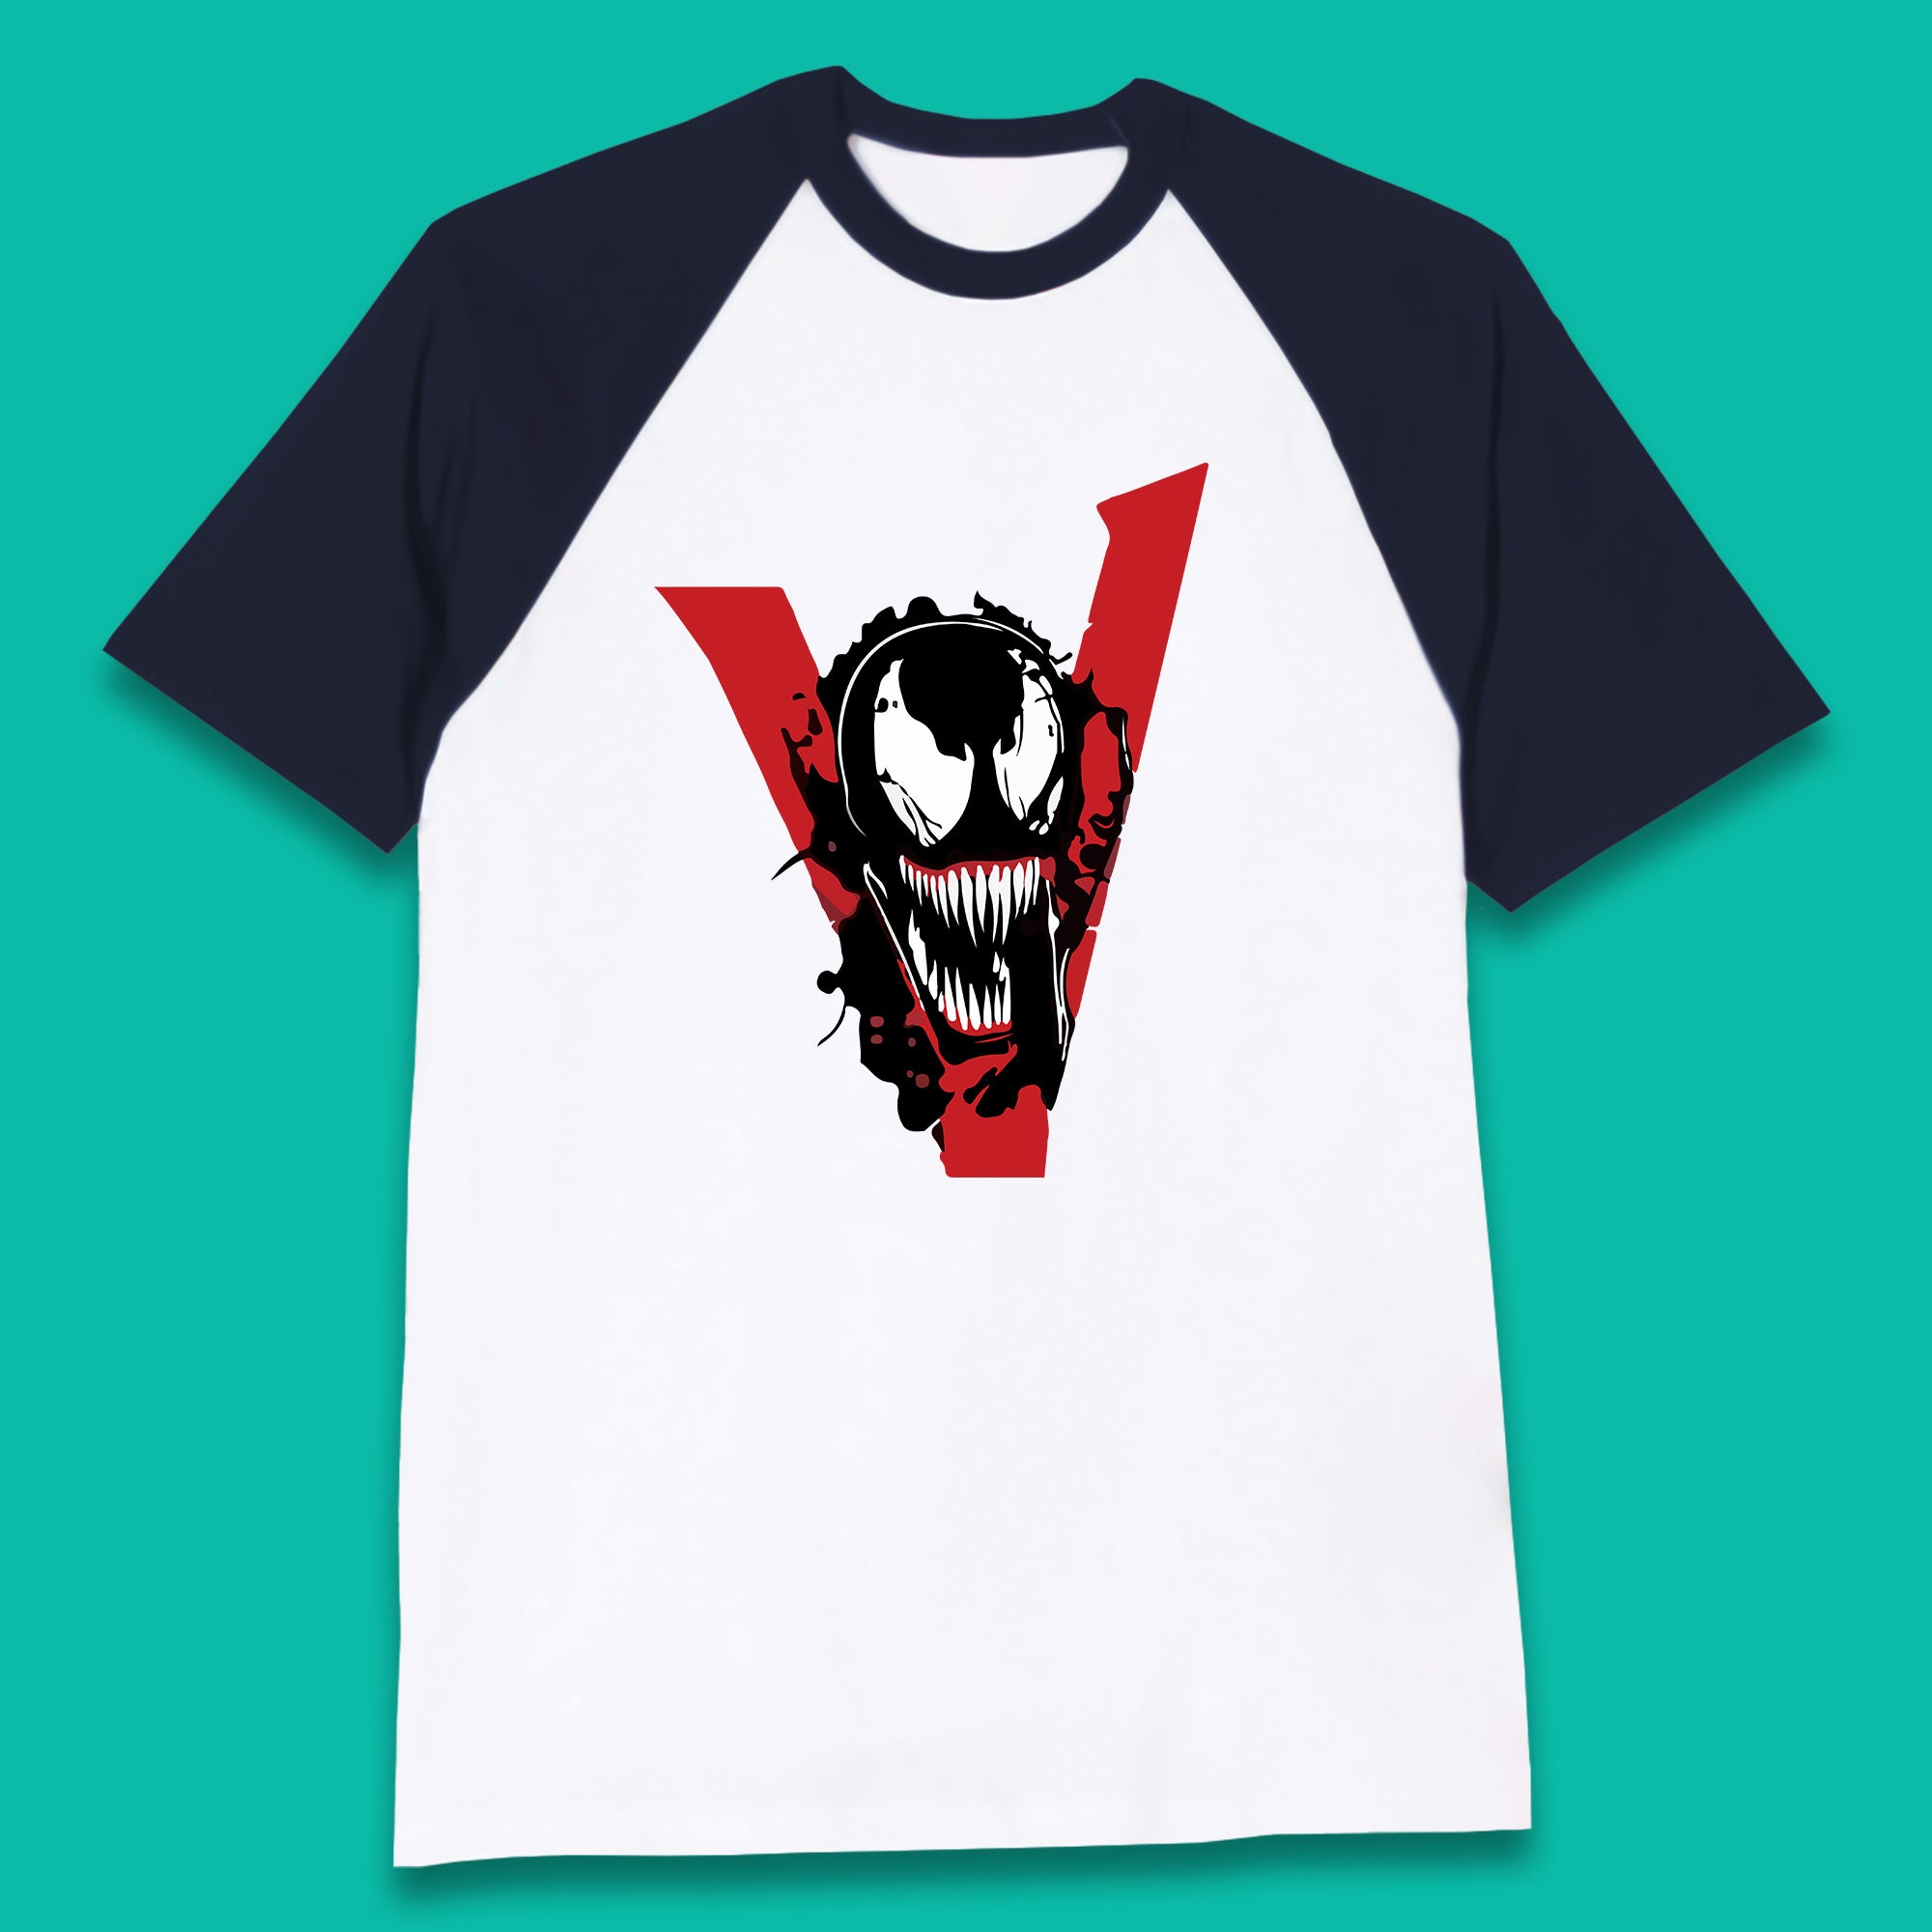 Marvel Venom Face Side View Tongue Out Marvel Avengers Superheros Movie Character Baseball T Shirt